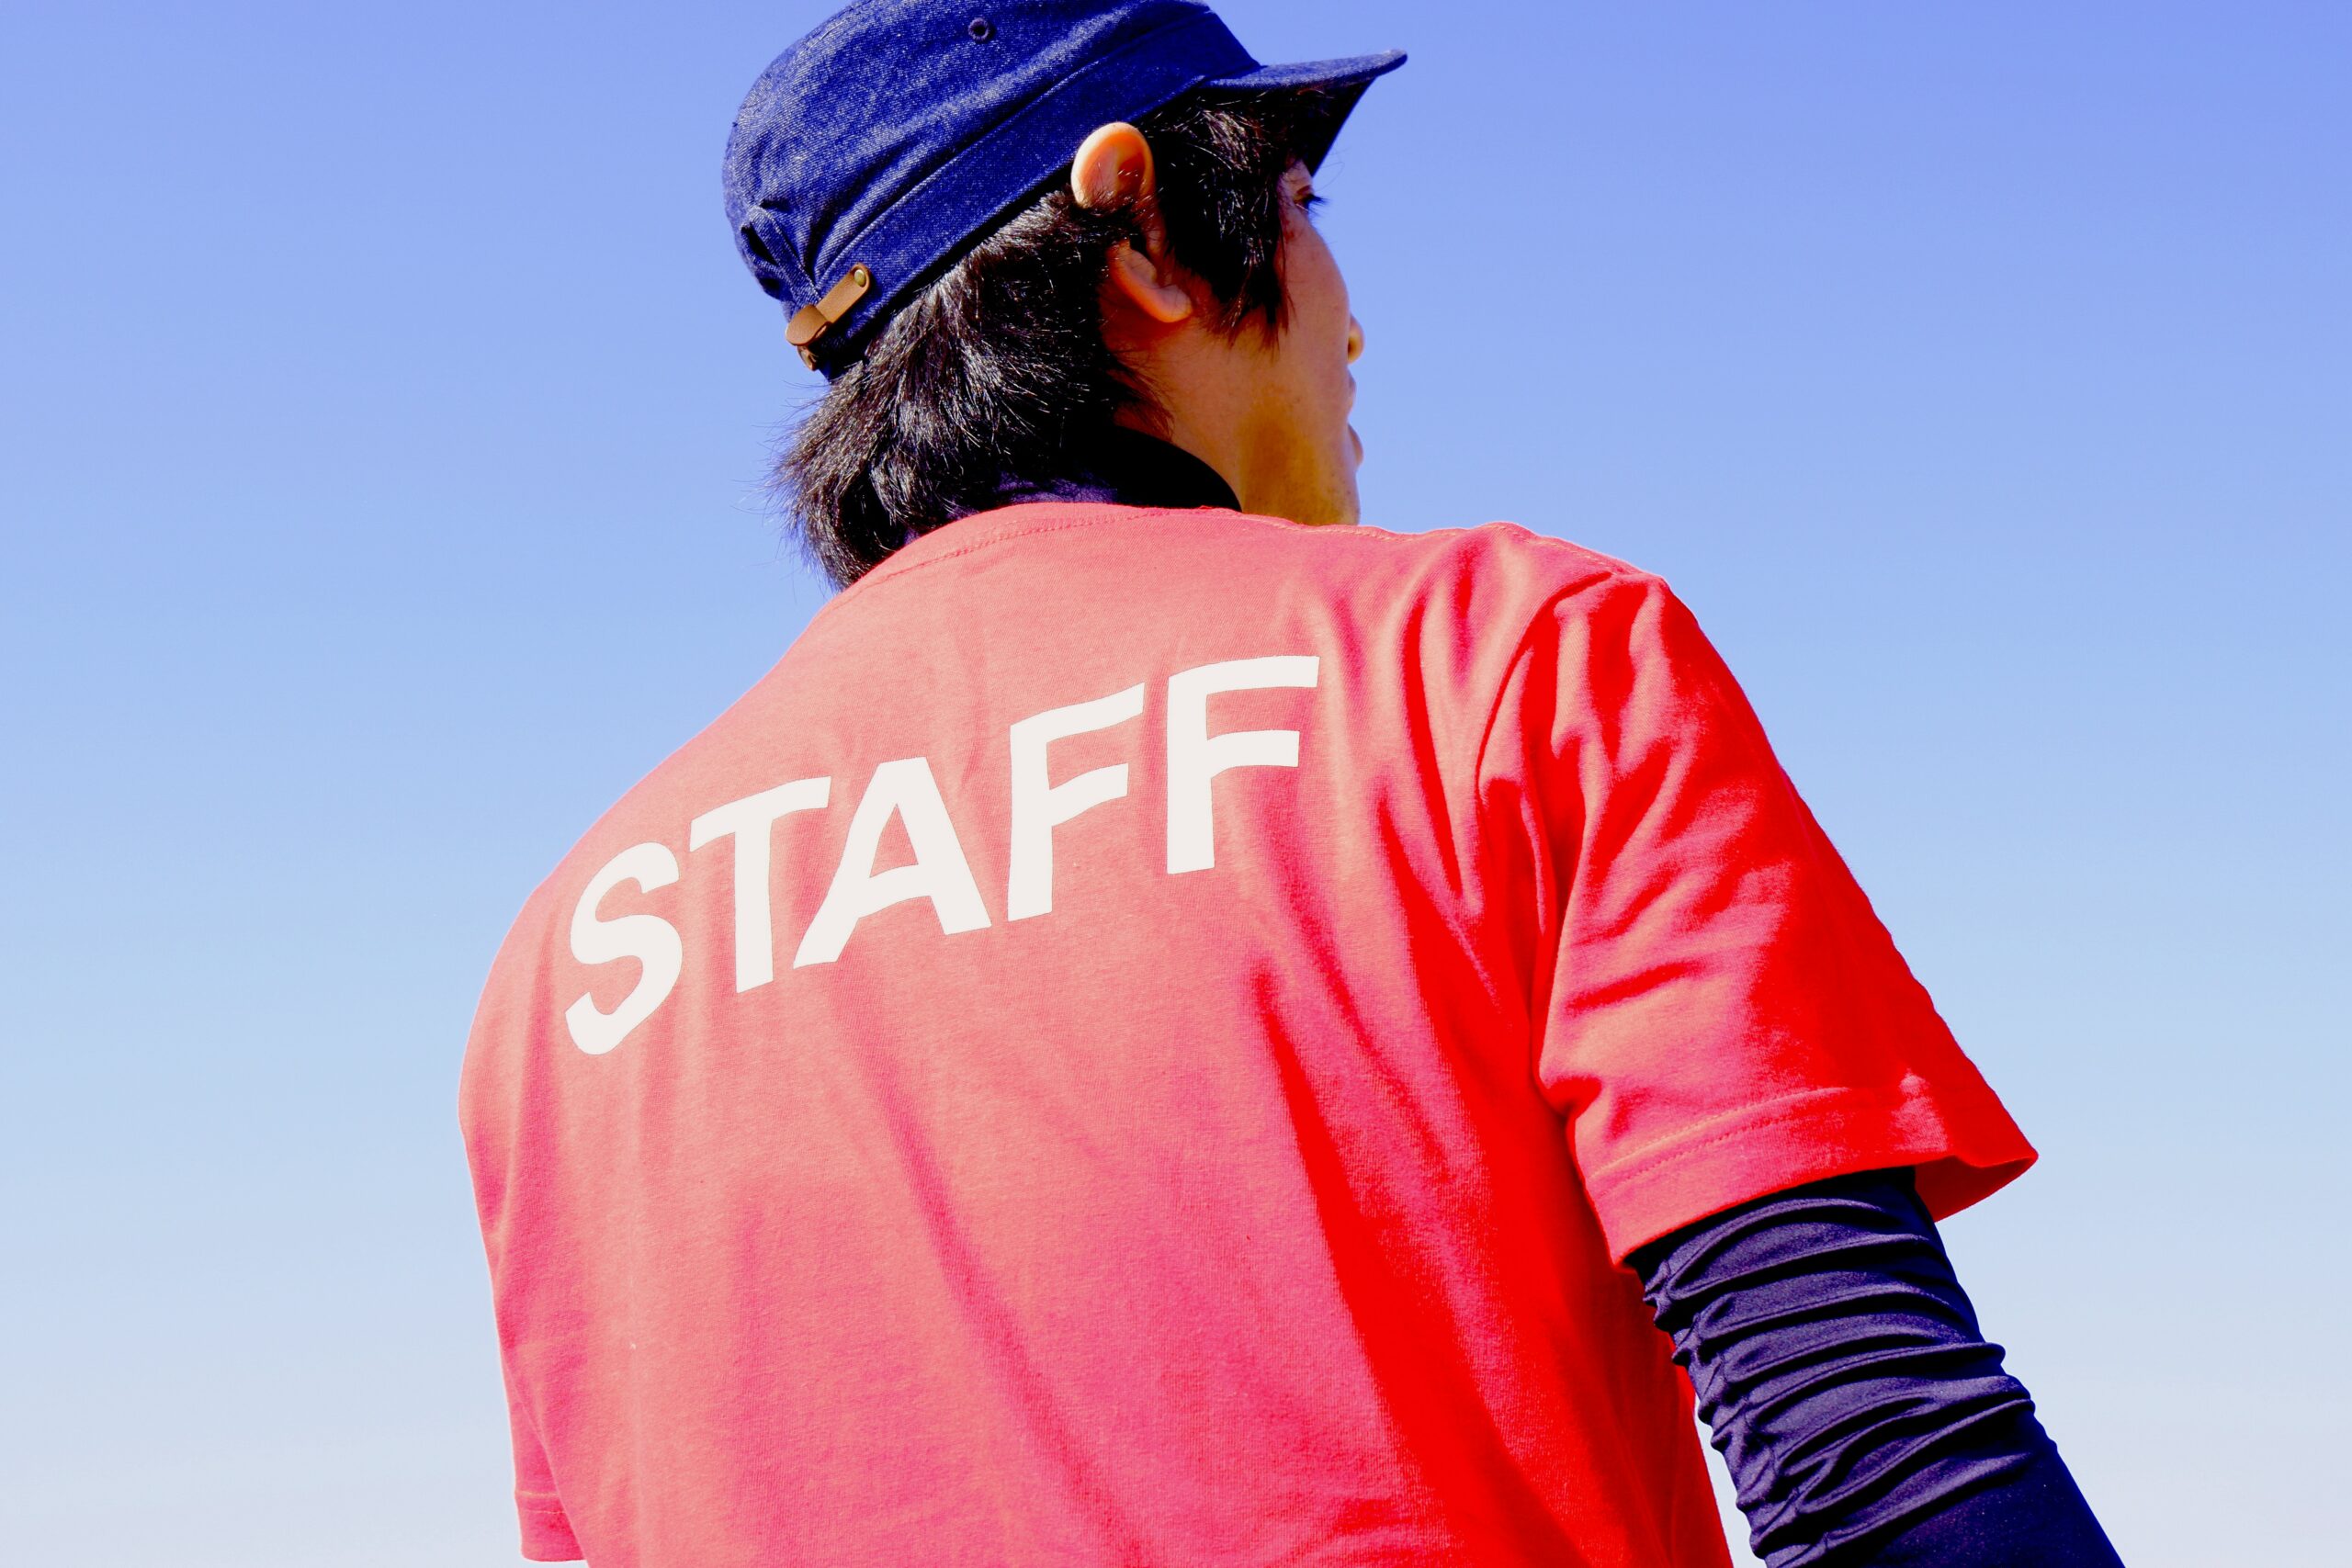 Man wearing a red Staff shirt